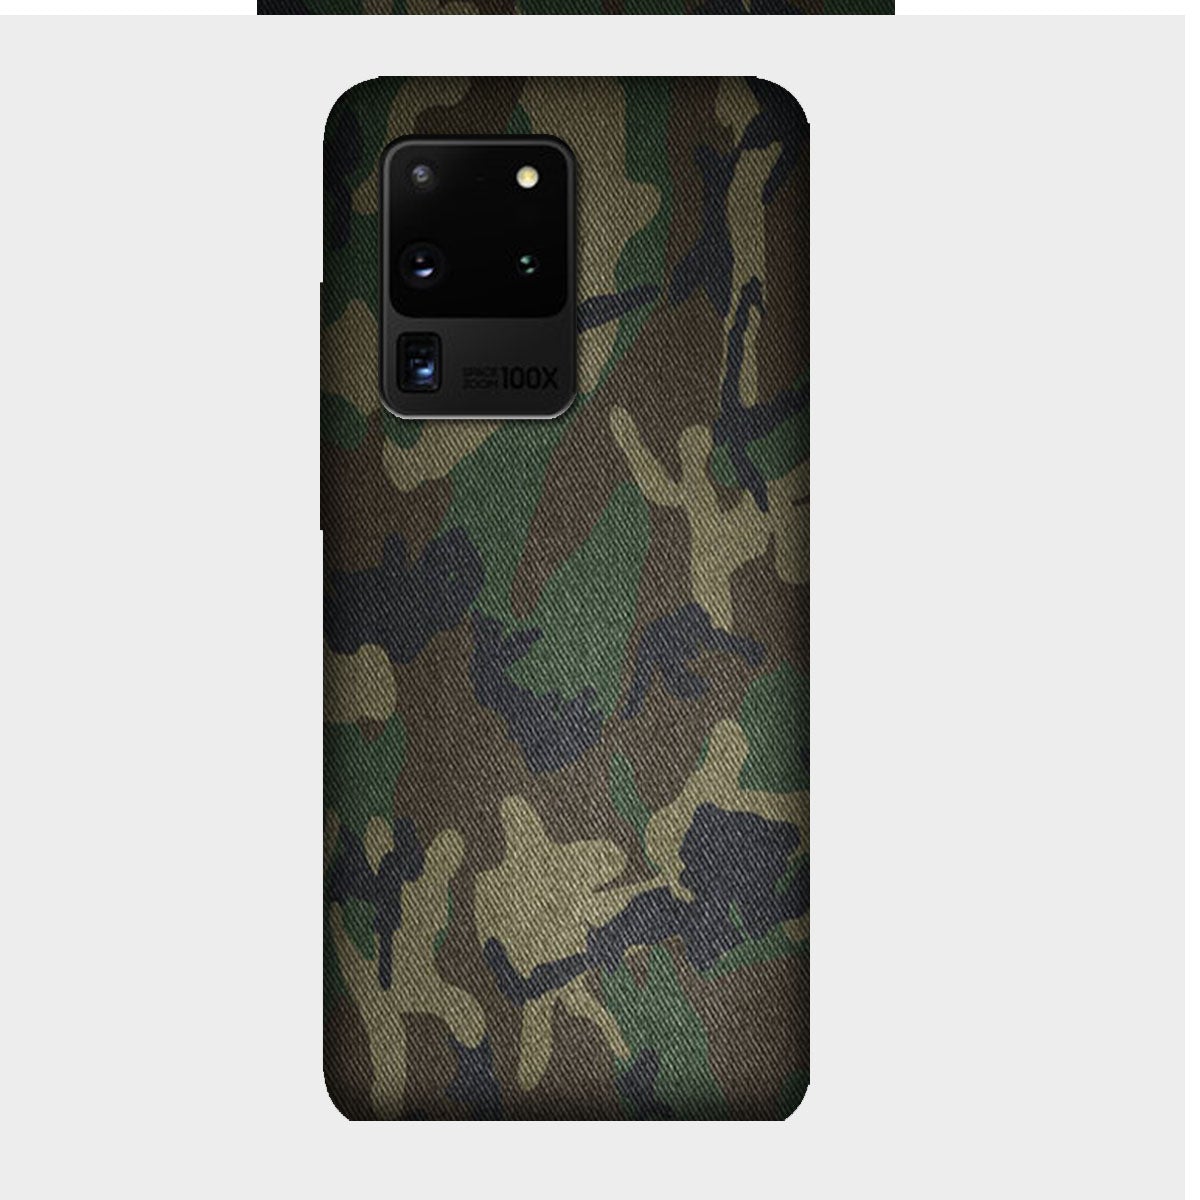 Camoflauge - Mobile Phone Cover - Hard Case - Samsung - Samsung